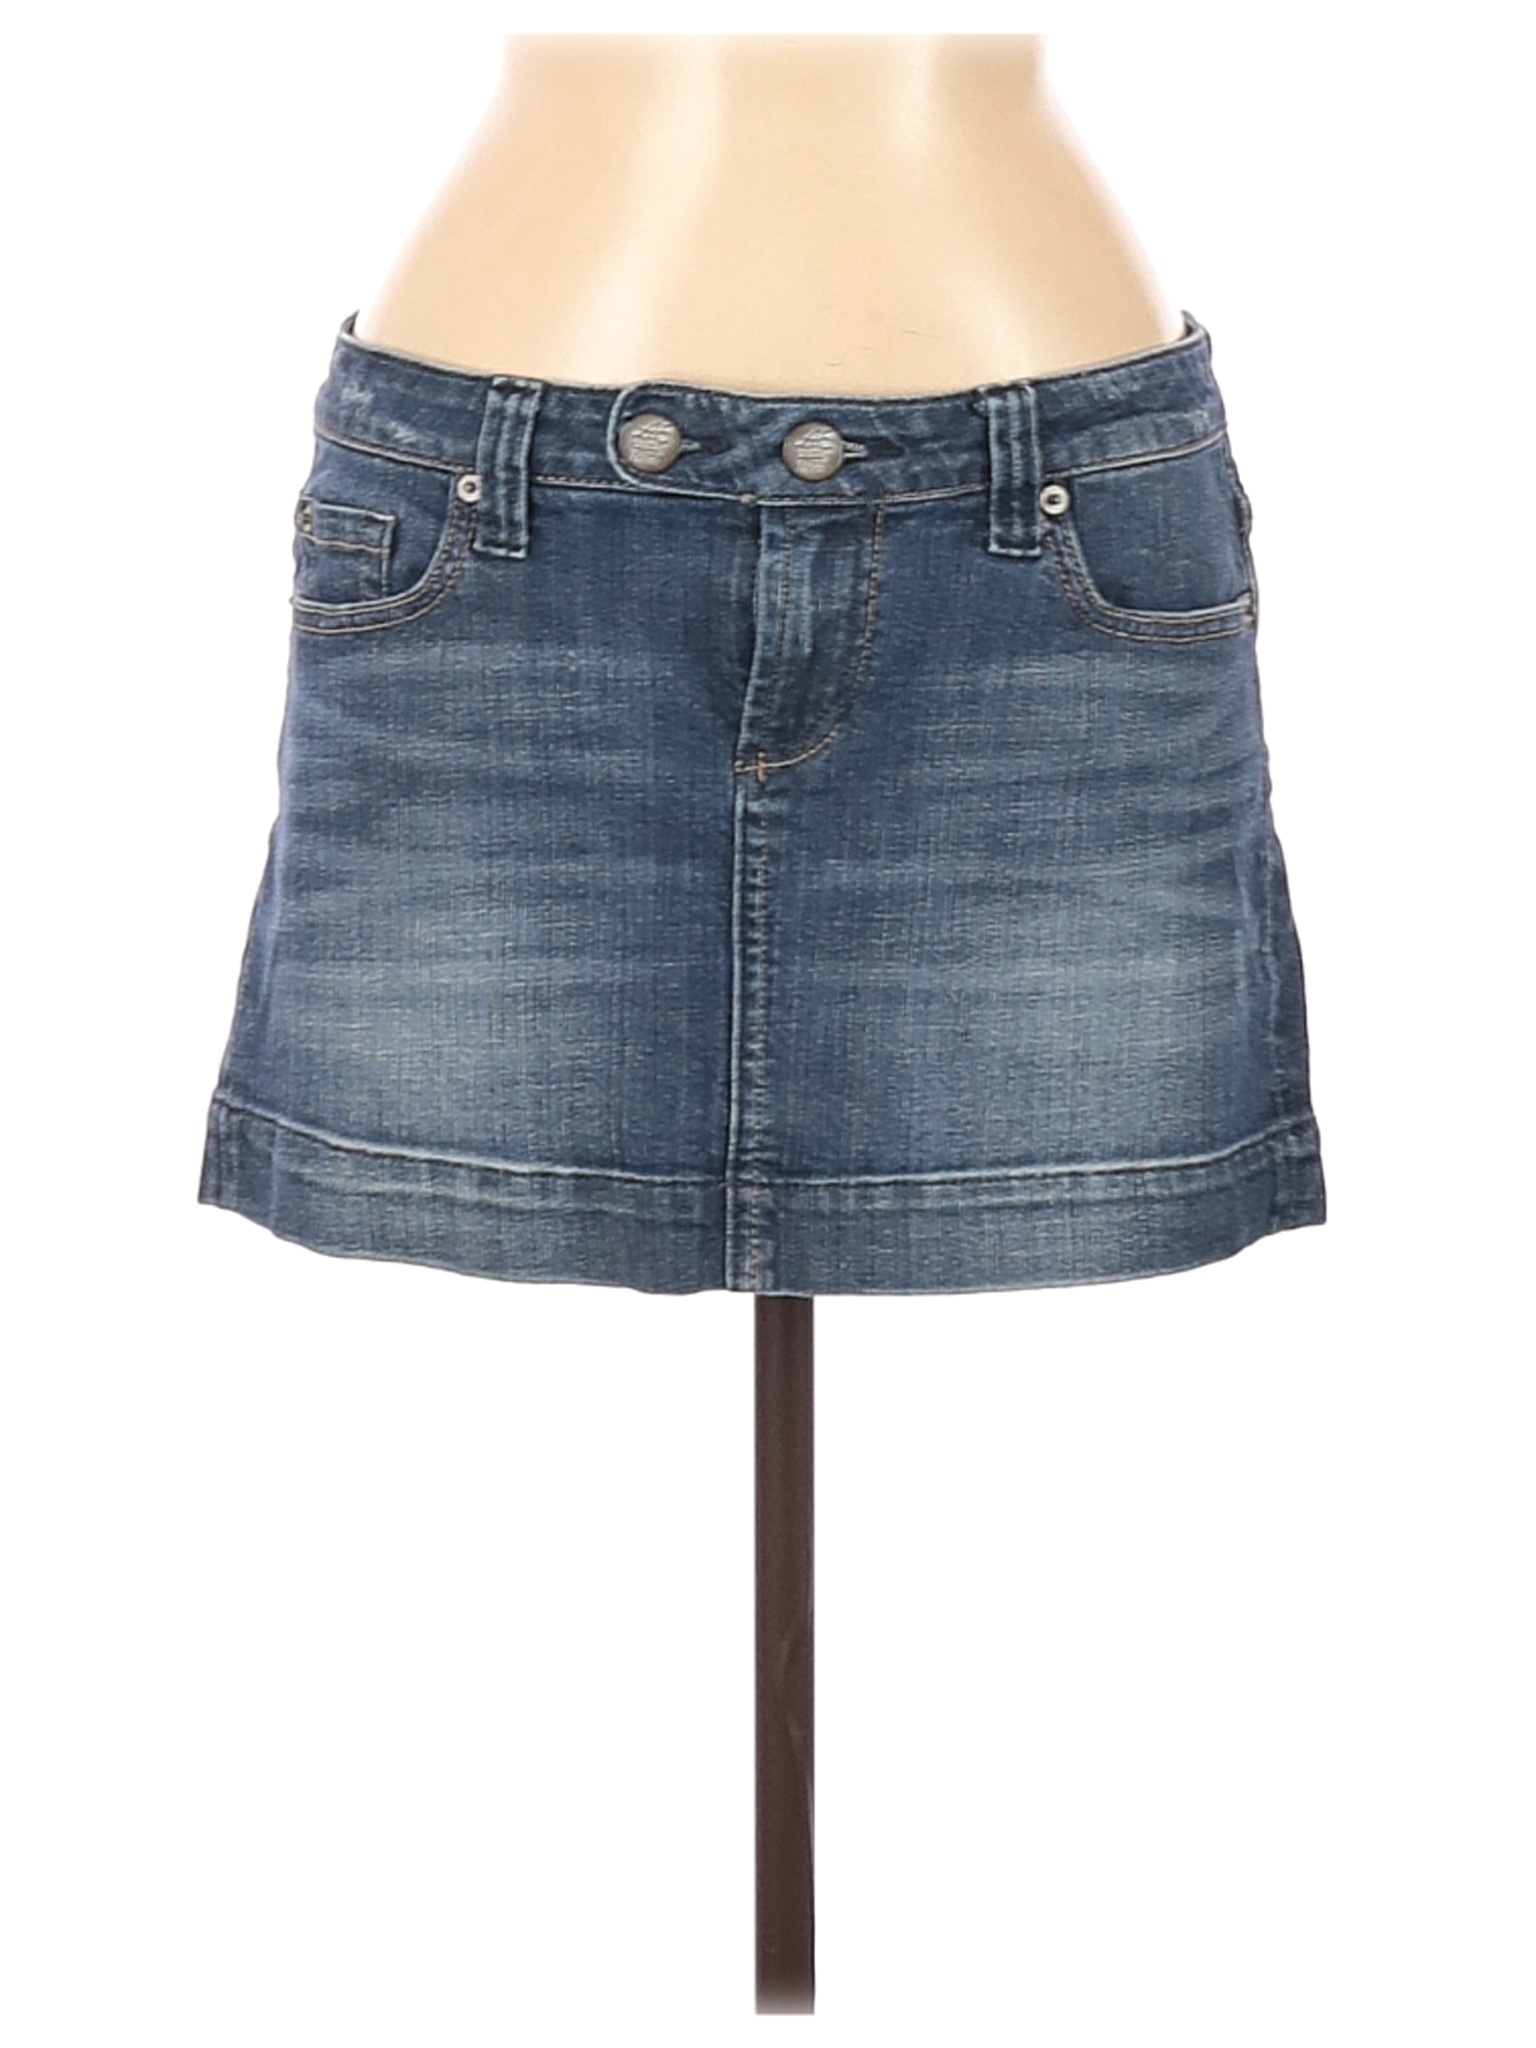 American Eagle Outfitters Women Blue Denim Skirt 6 | eBay